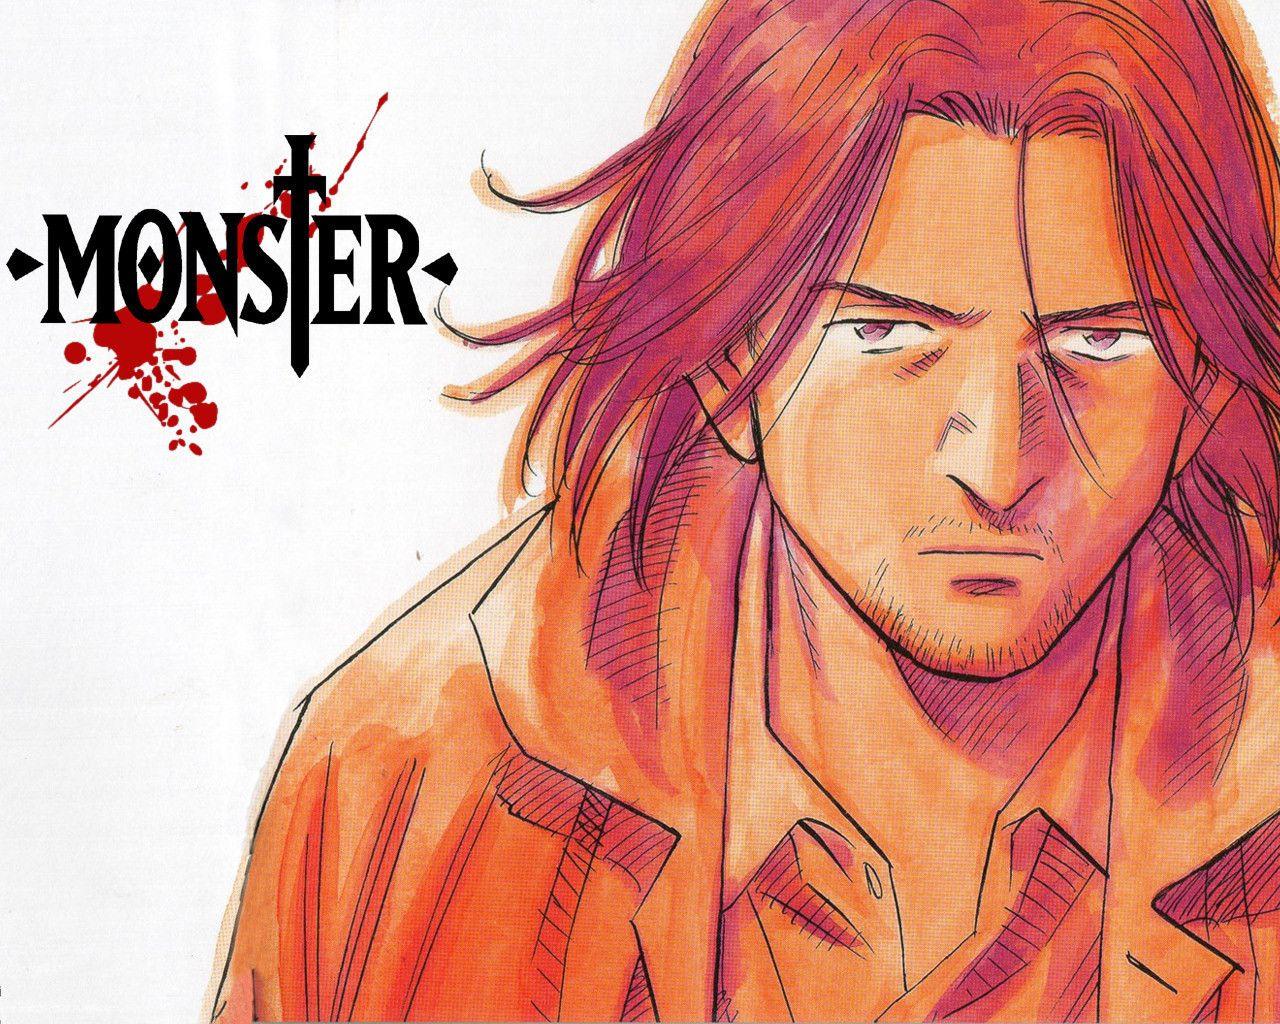 Monster: A Psychological Thriller by Naoki Urasawa